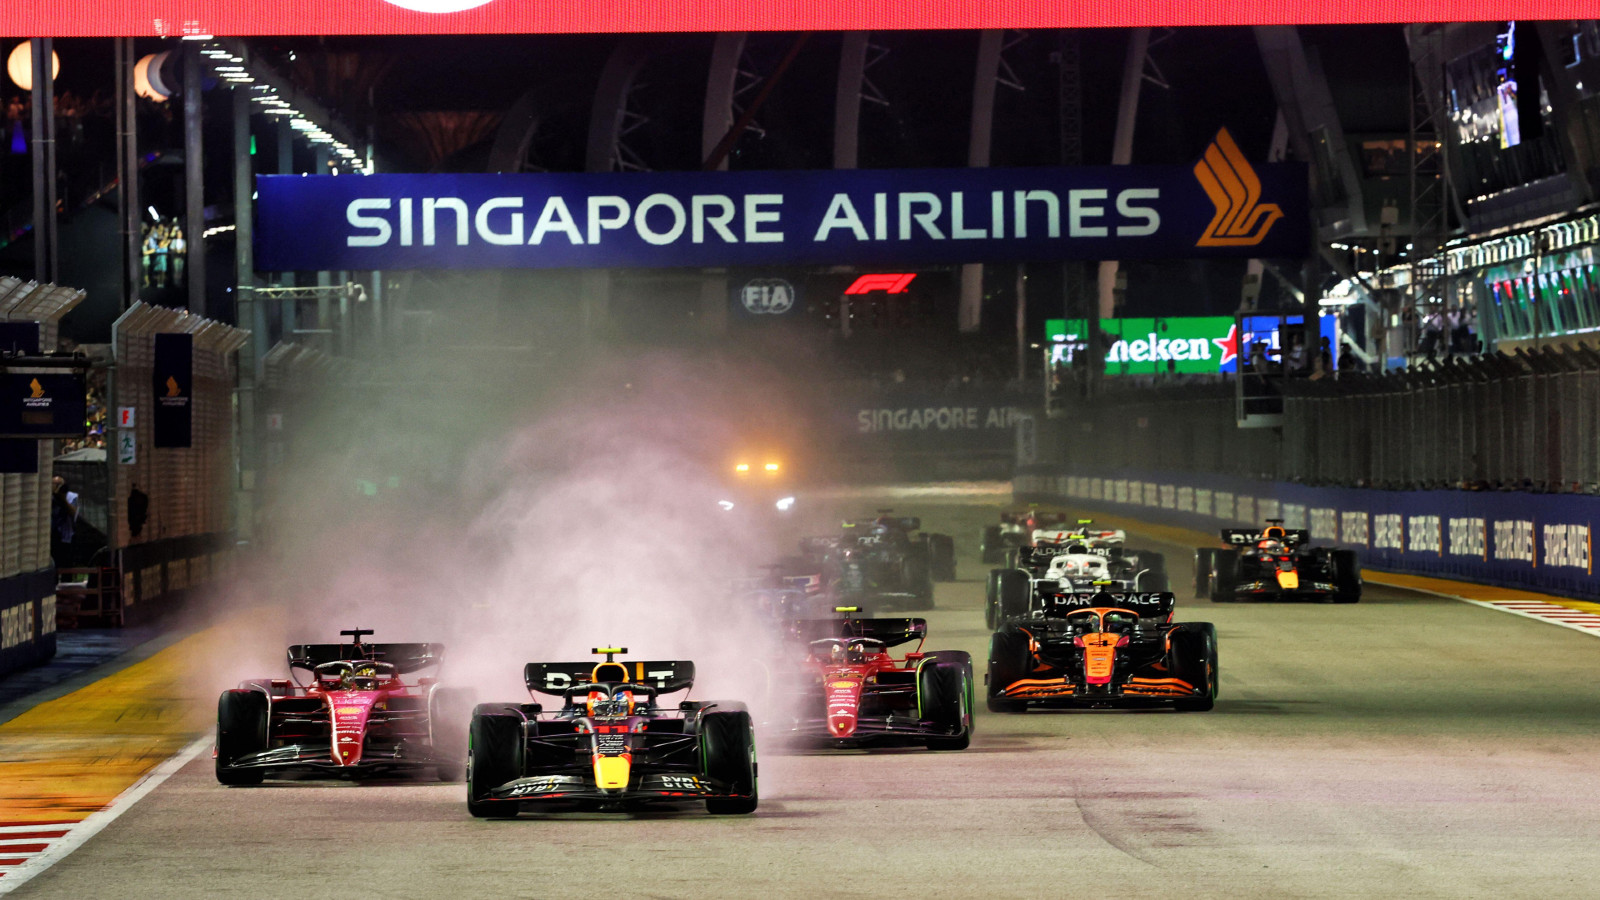 Red Bull's Sergio Perez leads Ferrari's Charles Leclerc into Turn 1 at the Singapore Grand Prix. Marina Bay, October 2022.